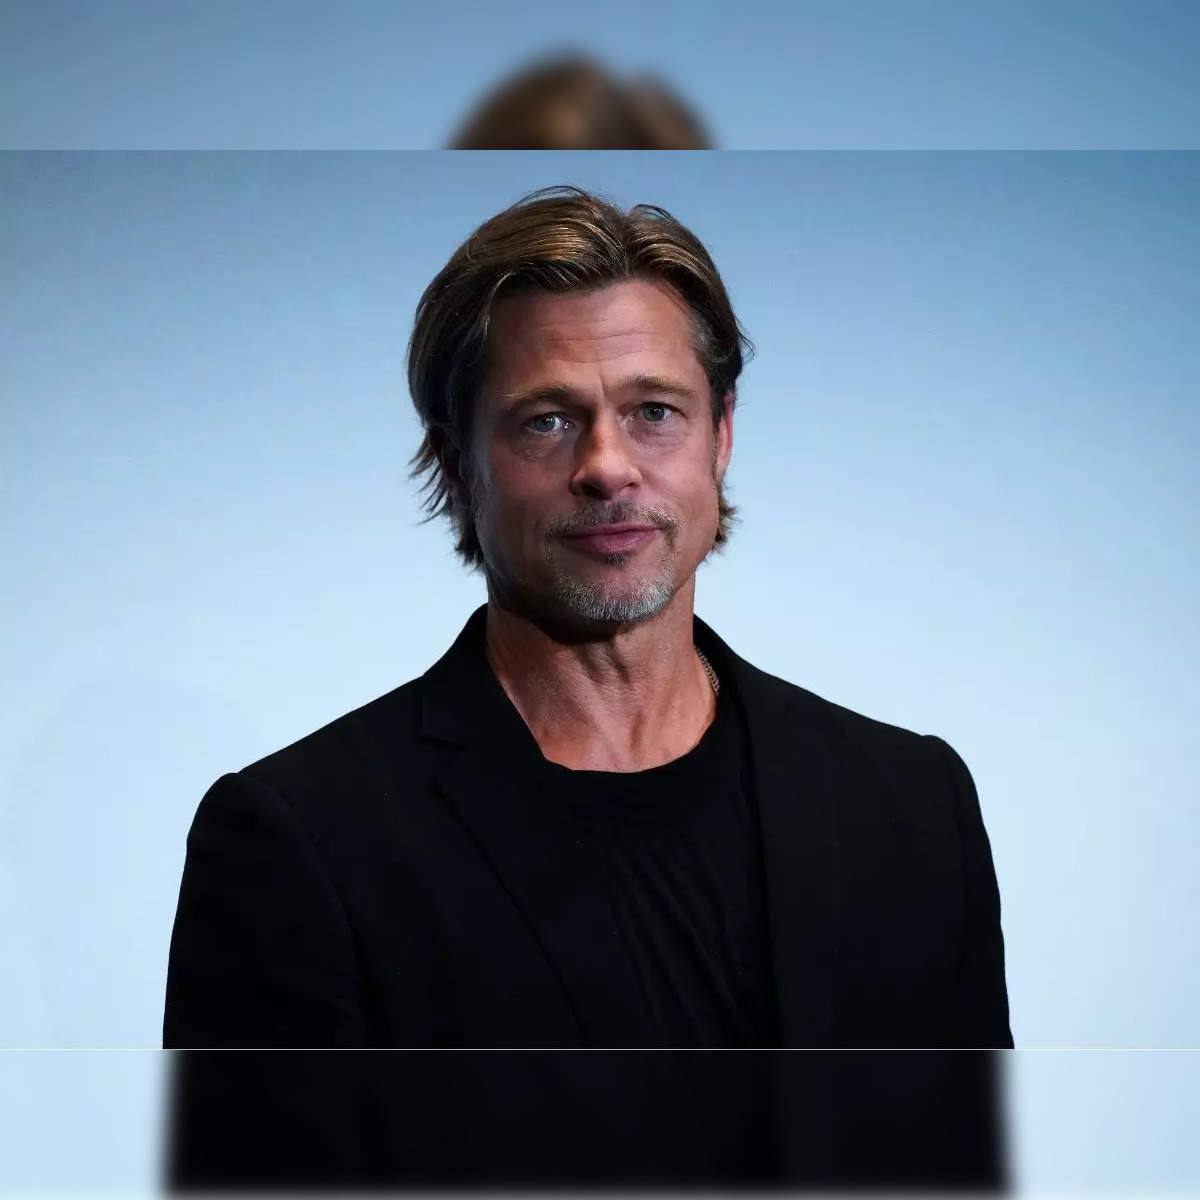 Brad Pitt retirement: Brad Pitt says he is going through 'last